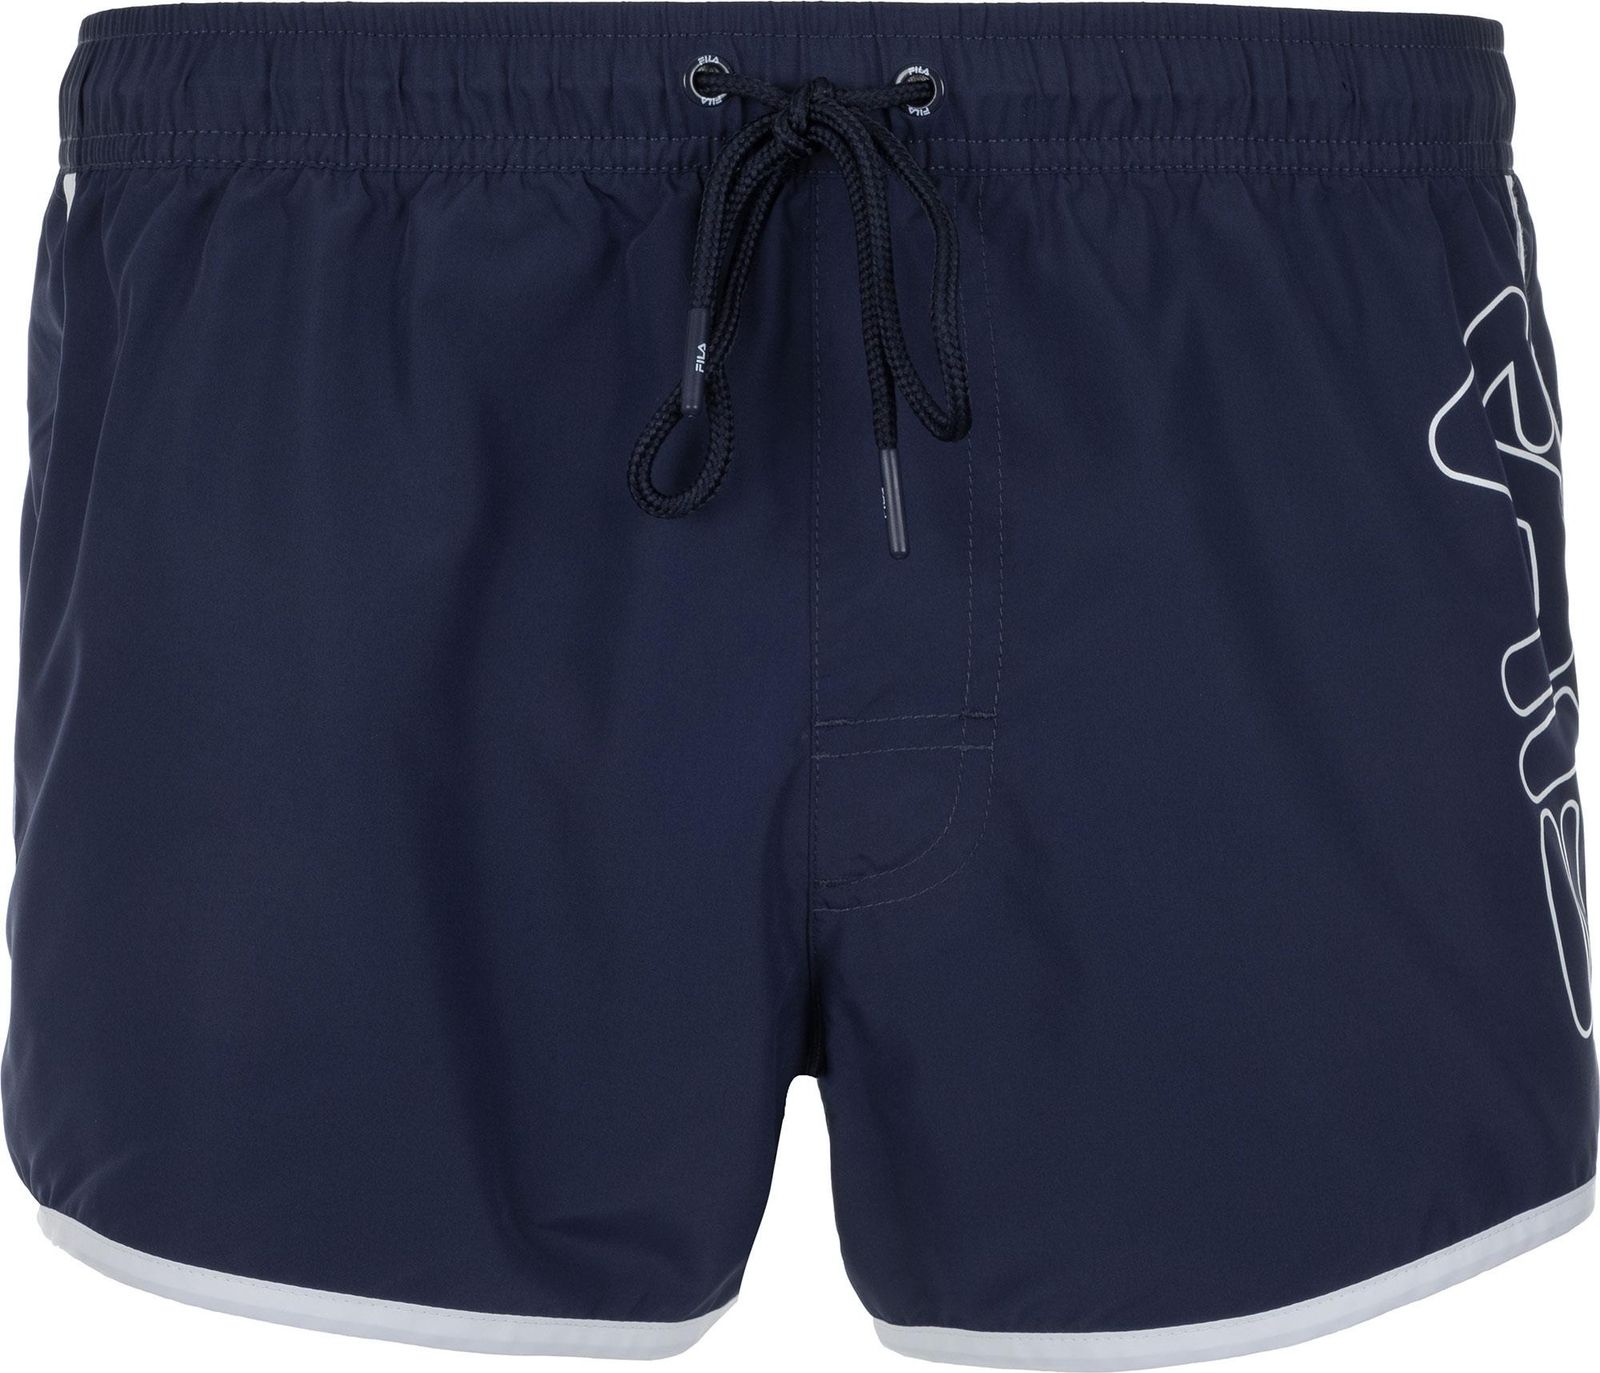   Fila Men's swim shorts, : , . S19AFLSHM05-MW.  L (50)